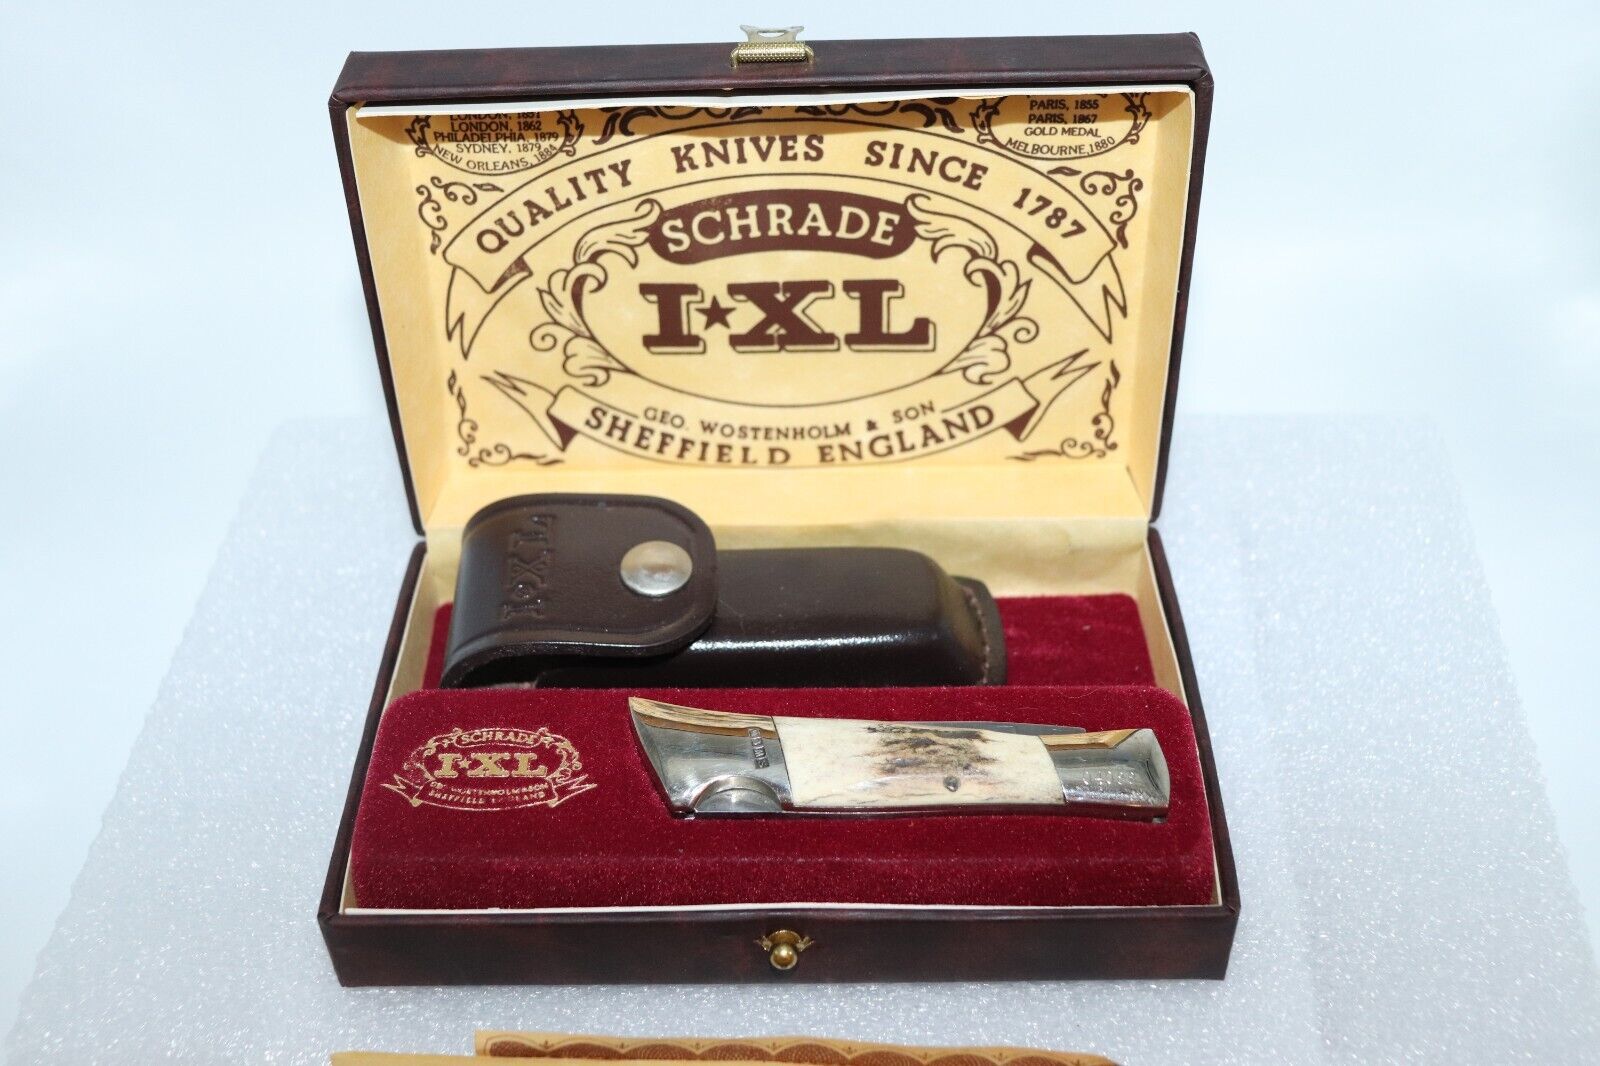 Schrade I*XL Geo. Wostenholm #GS30 Stag Handle Pocket Knife Sheffield England